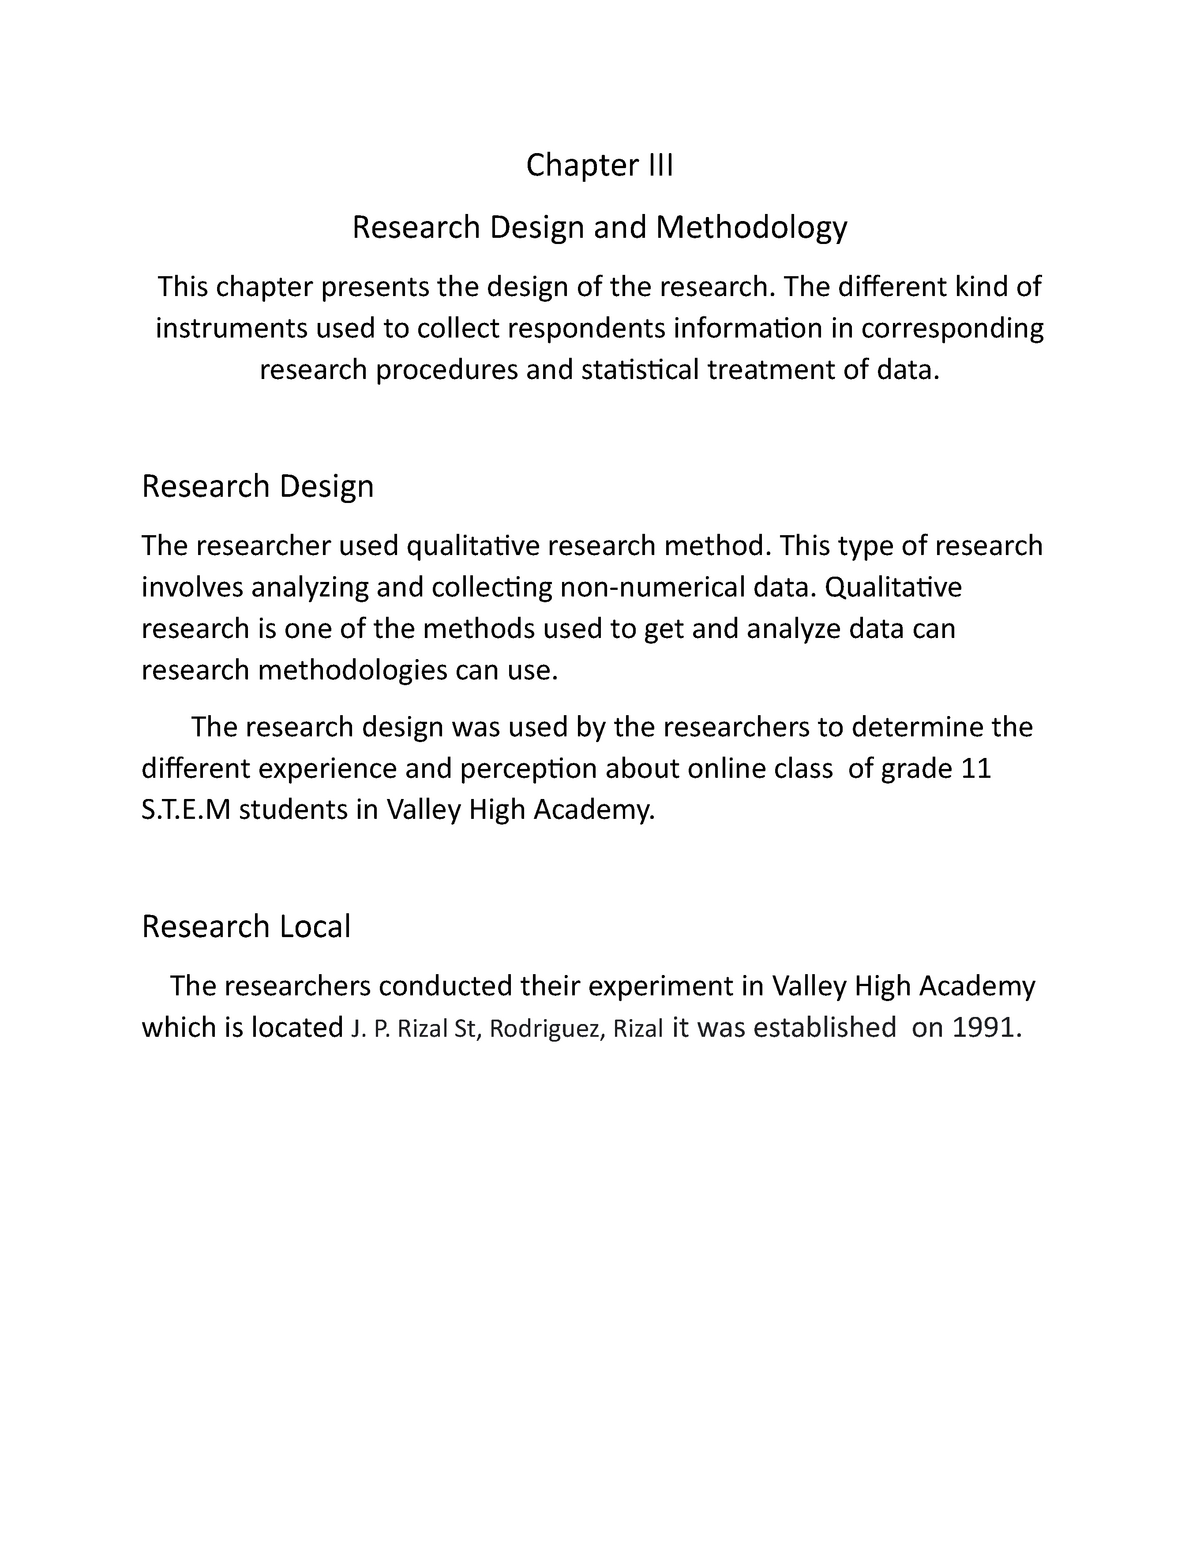 chapter 3 research methodology slideshare